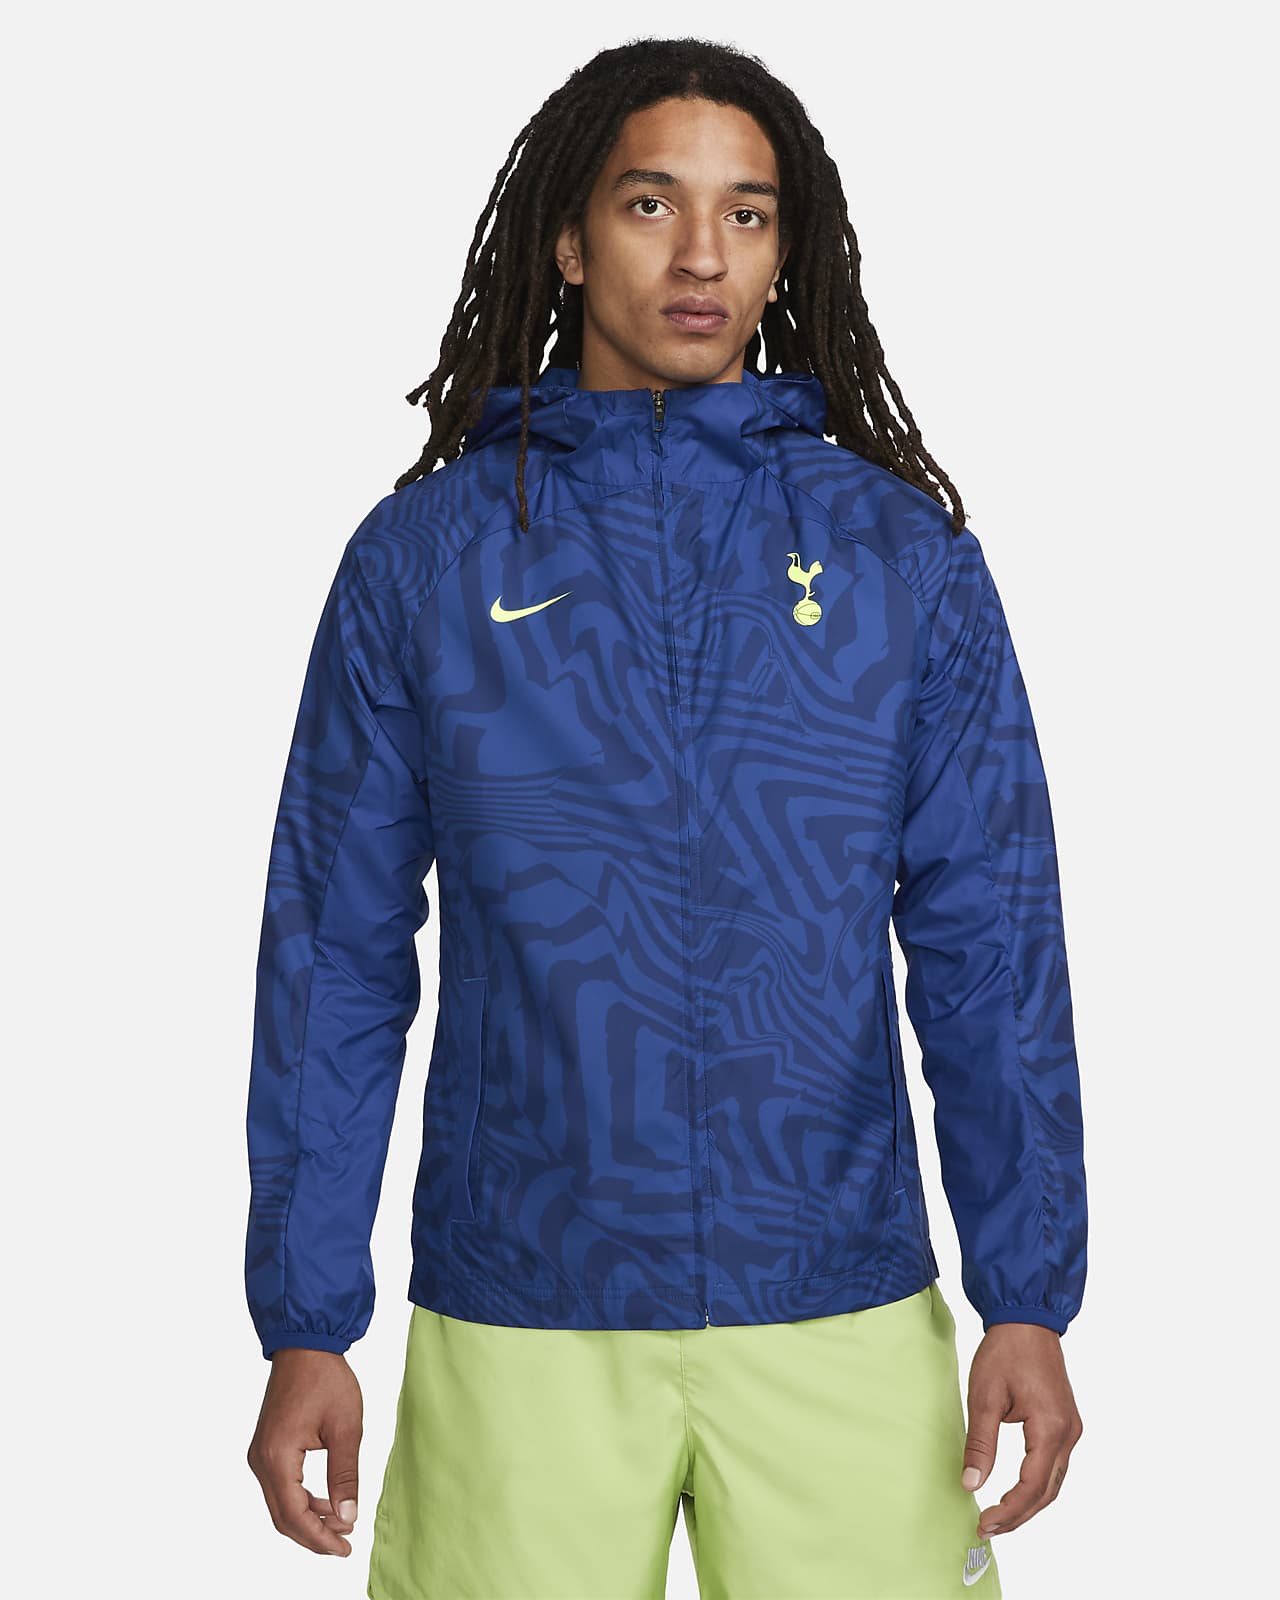 Tottenham Hotspur AWF Men's Soccer Jacket